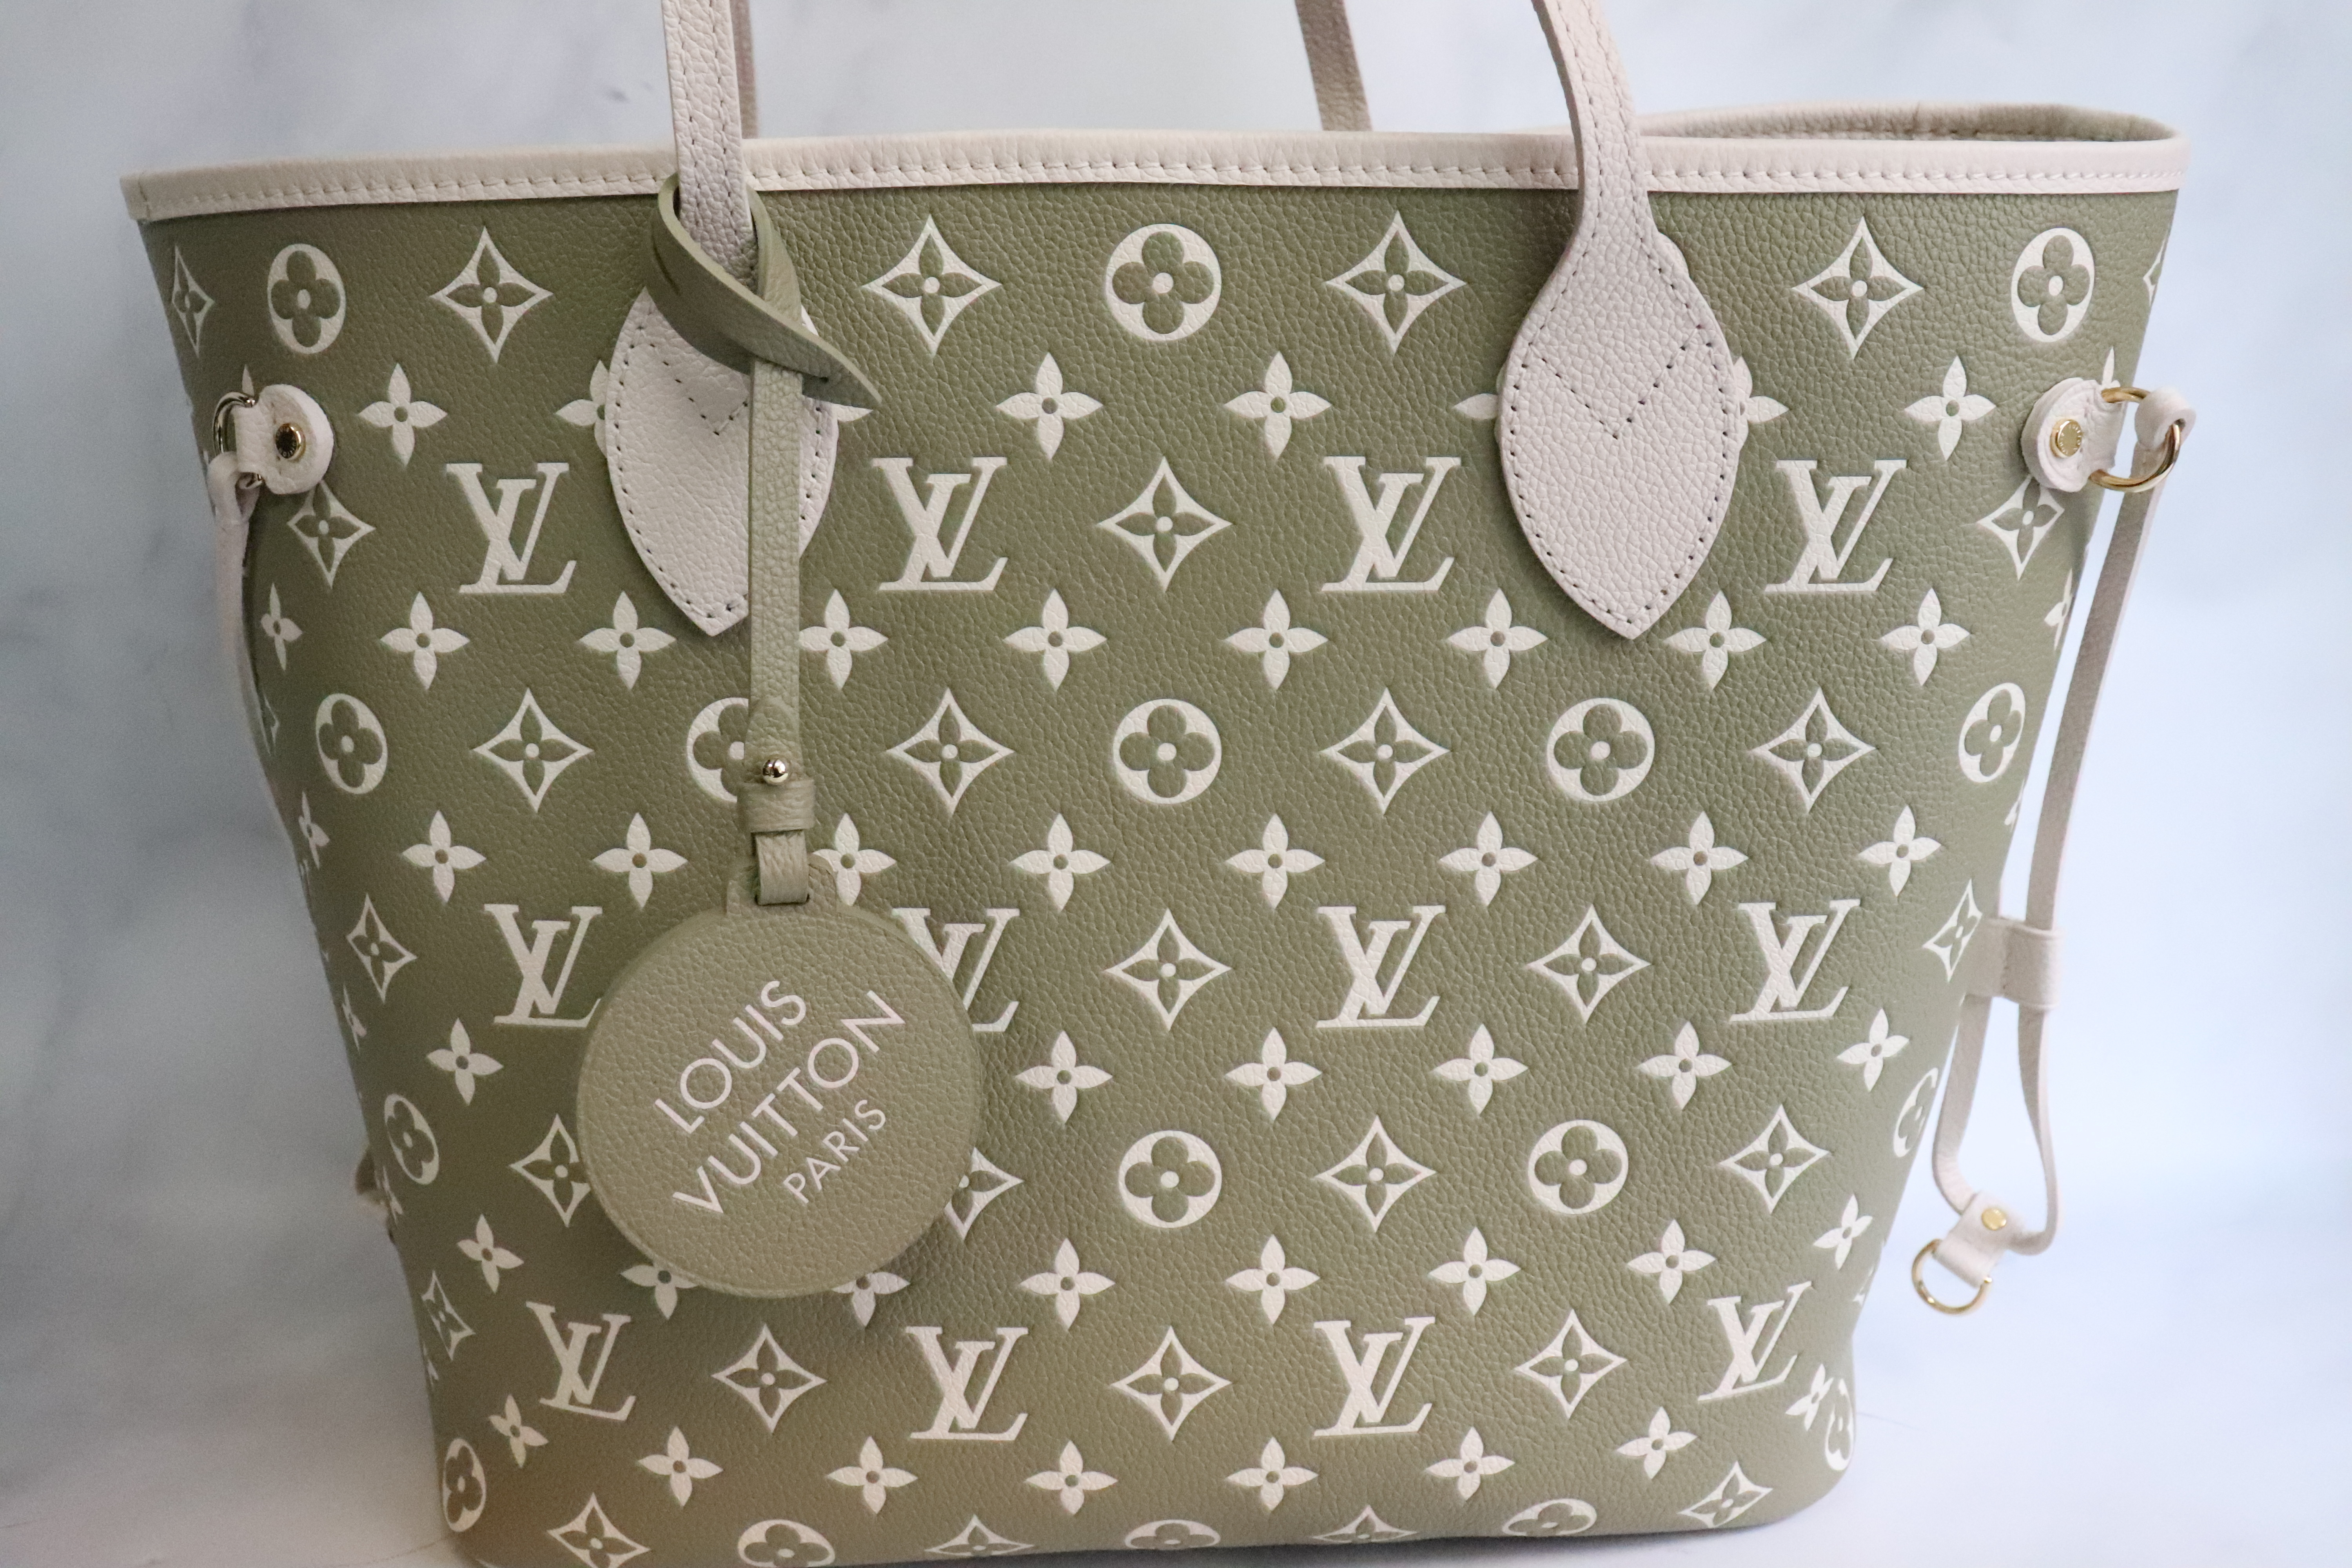 Louis Vuitton Neverfull MM Kaki Beige Monogram Empreinte Bag